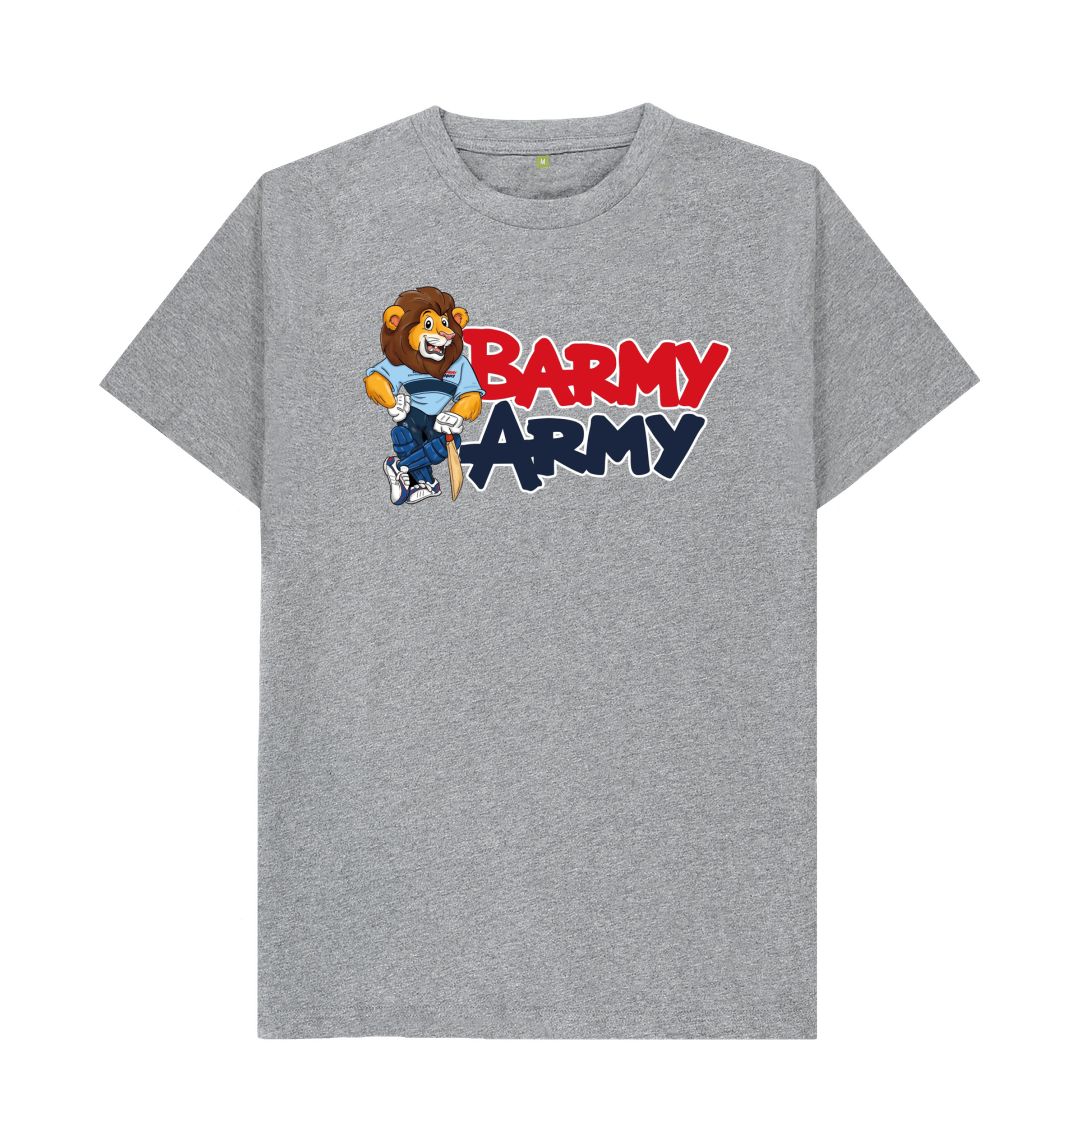 Athletic Grey Barmy Army Mascot Tee -Men's